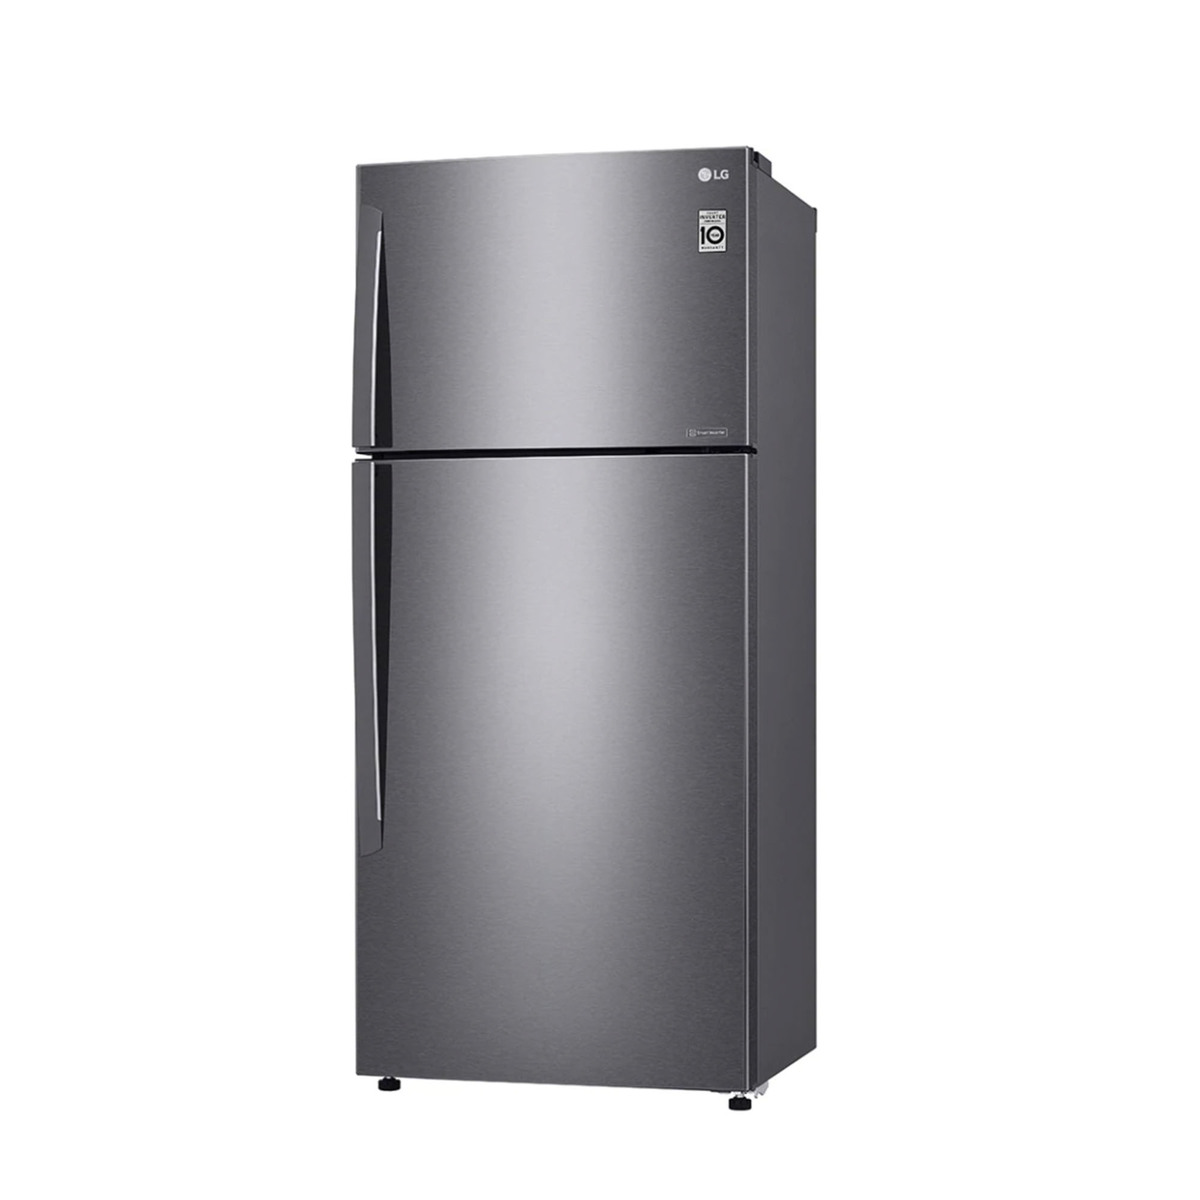 LG Double Door Refrigerator GN-C752HQCL 509LTR